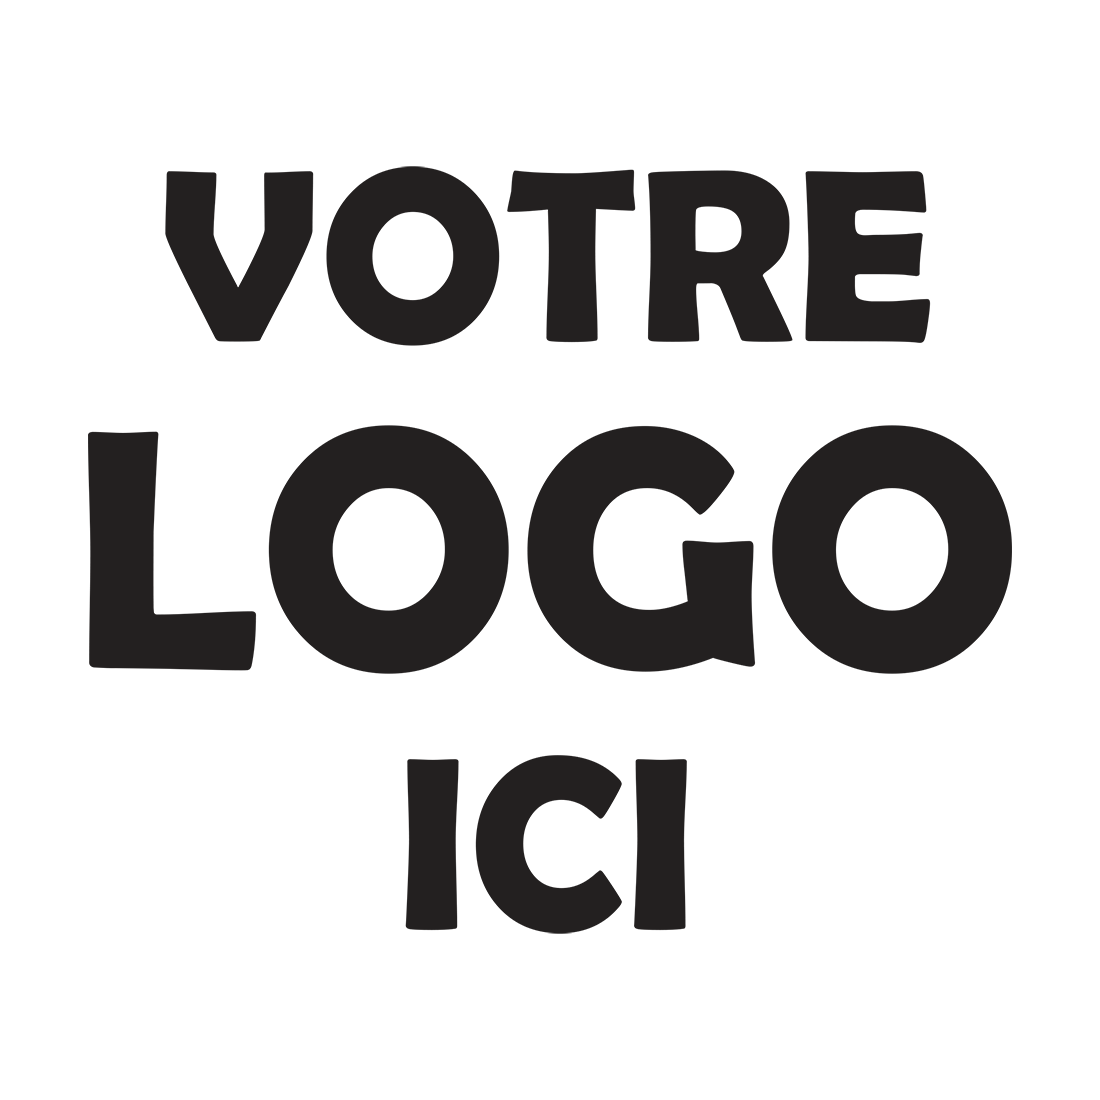 création de logo